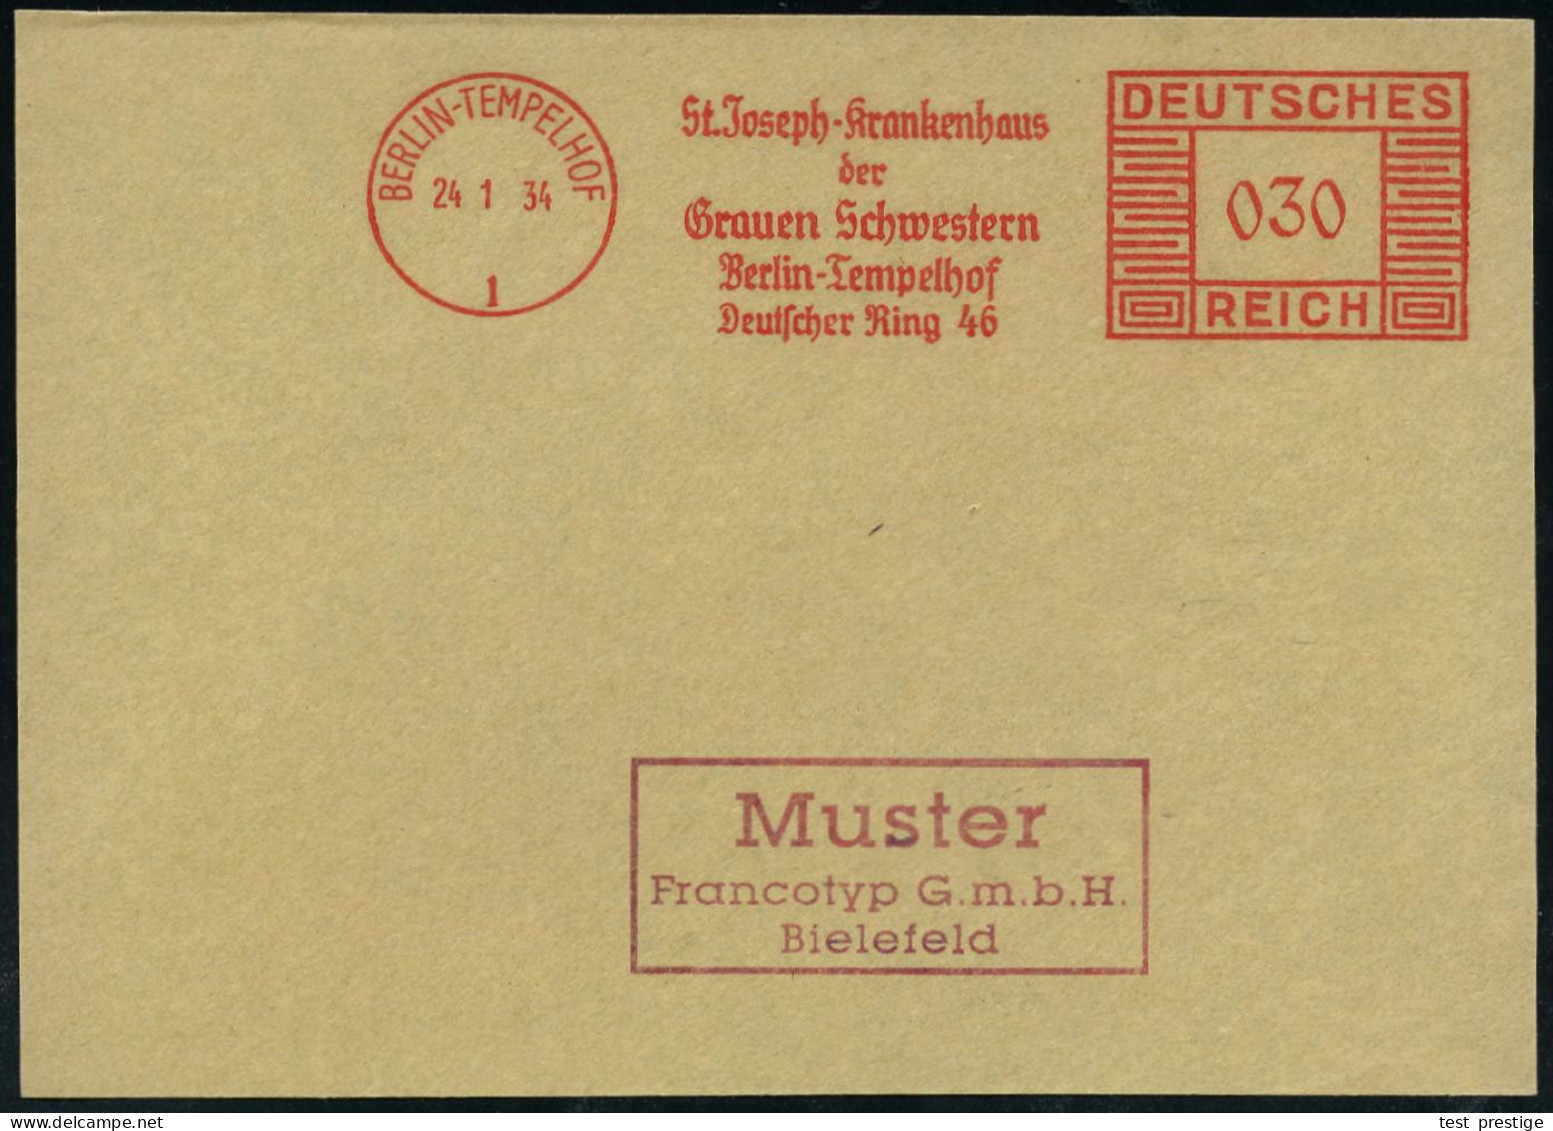 BERLIN-TEMPELHOF/ 1/ St.Joseph-Krankenhaus/ Der/ Grauen Schwestern 1934 (24.1.) AFS-Musterabdruck Francotyp "Mäanderrech - Geneeskunde